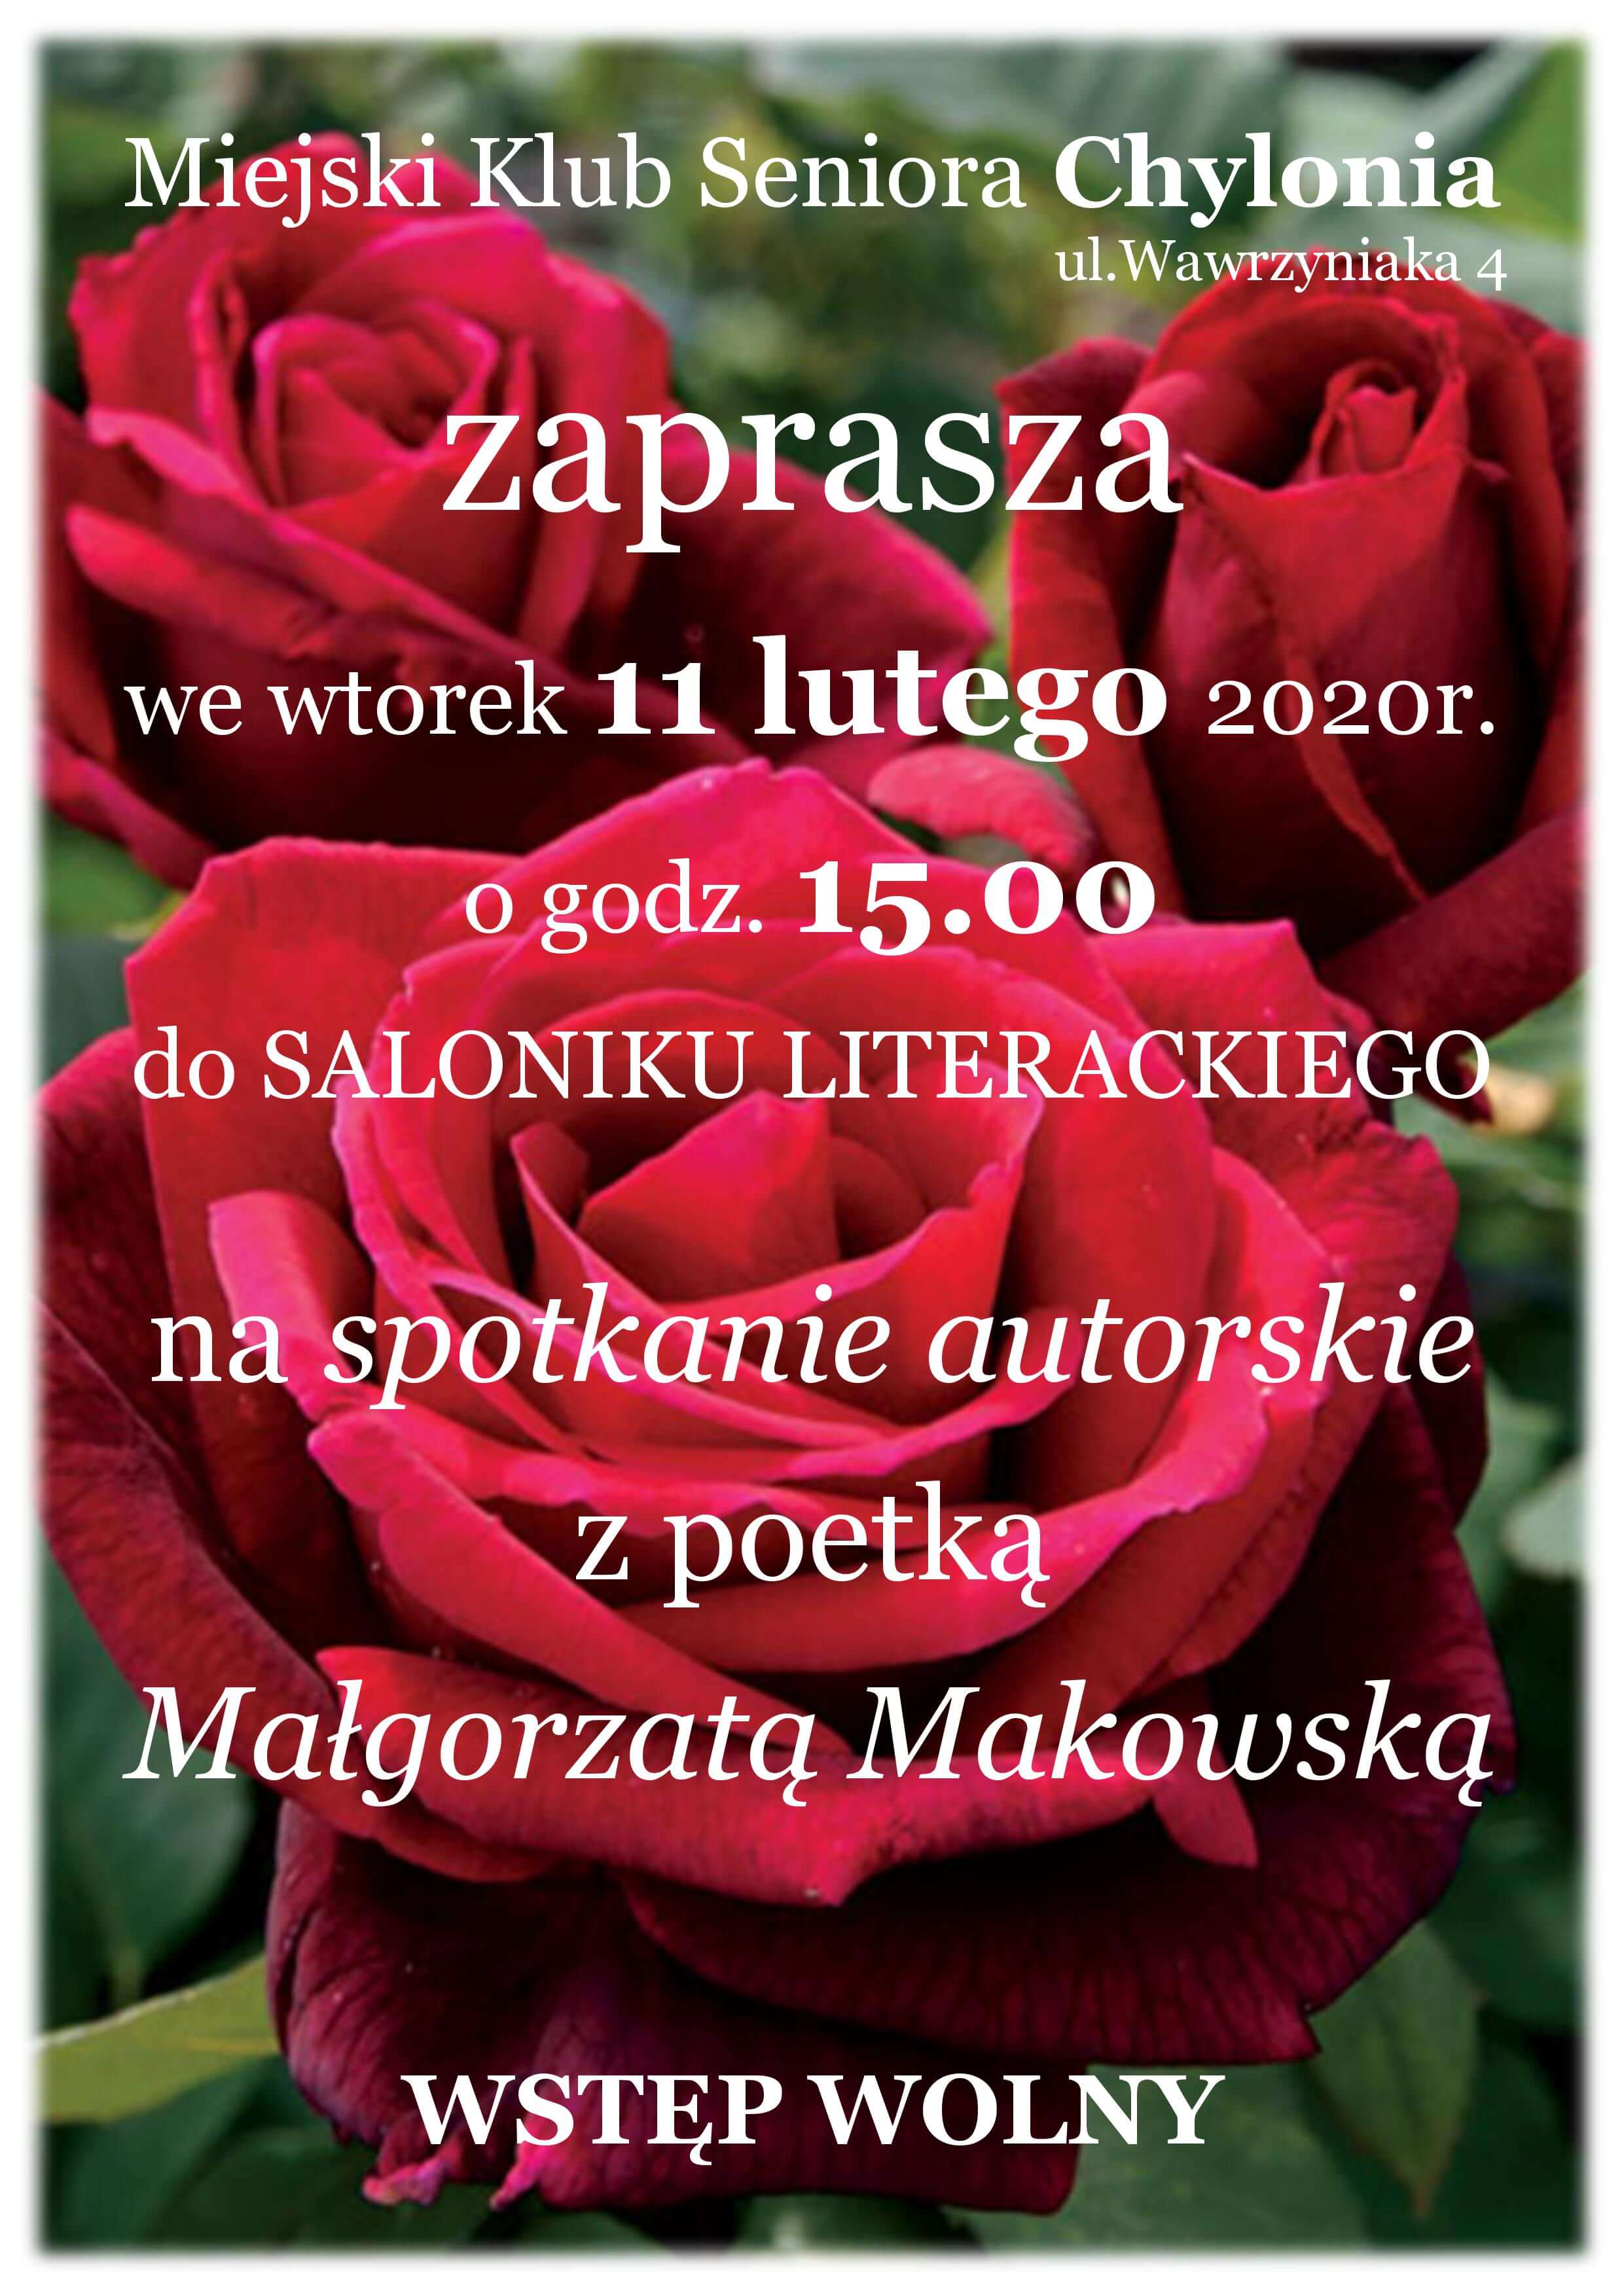 11.02.2020 Salonik literacki Małgorzata Makowska